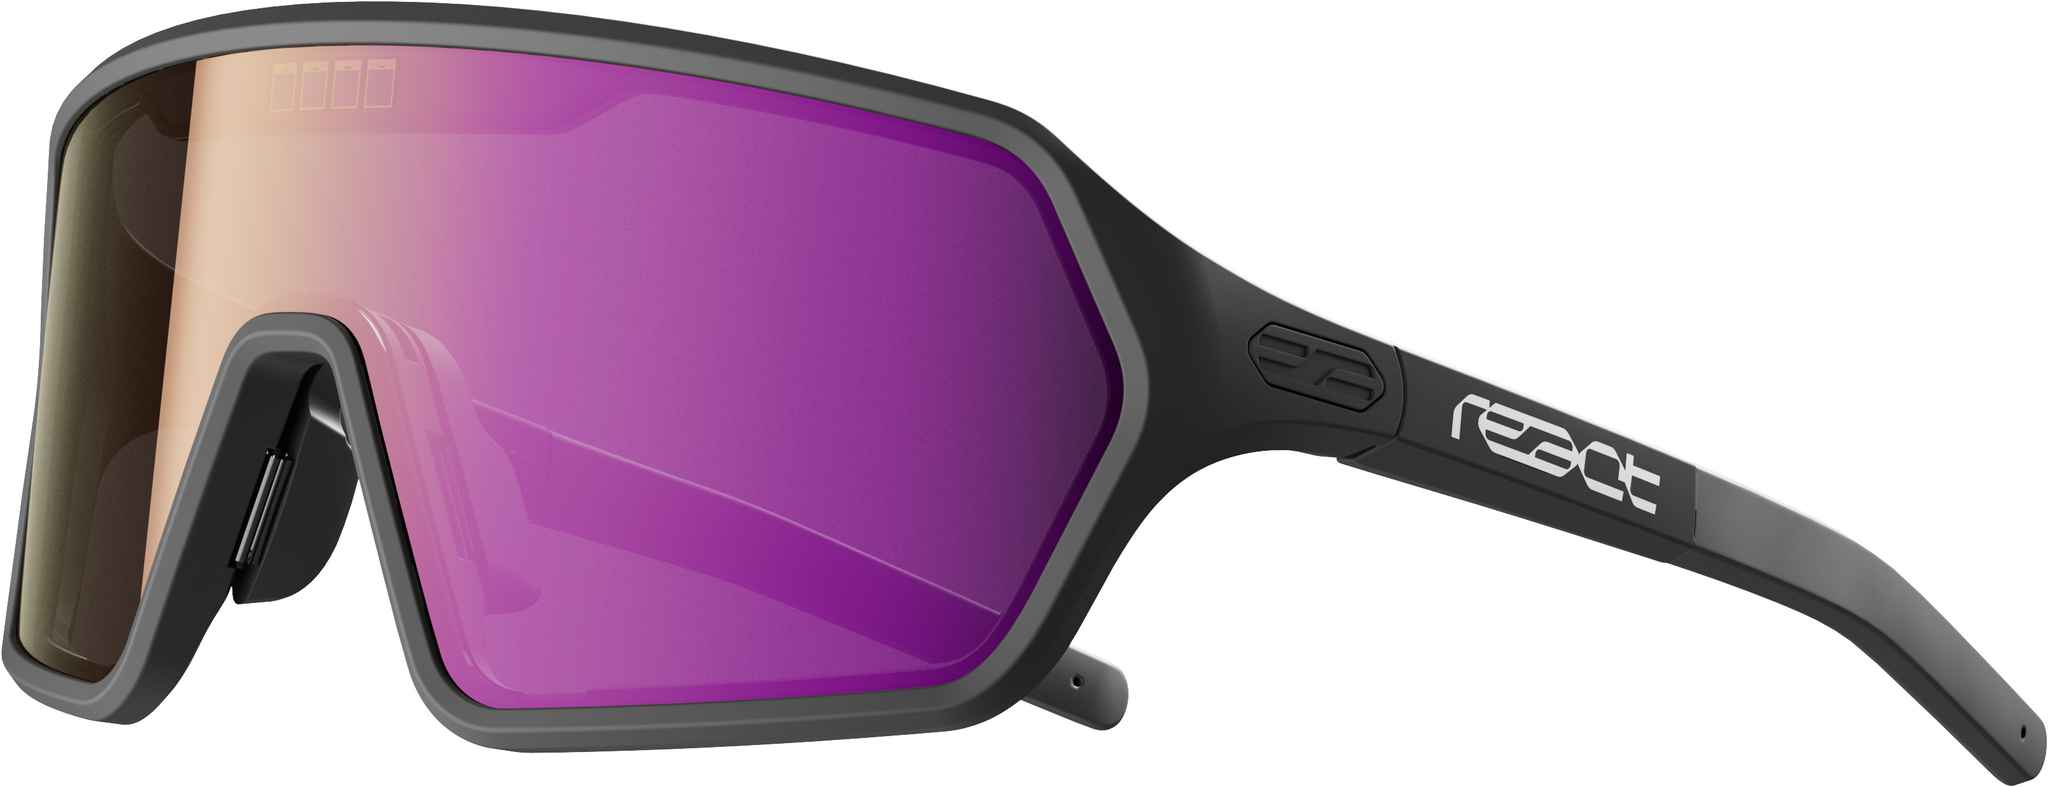 REV Sportbrille , nova black - Hauptansicht